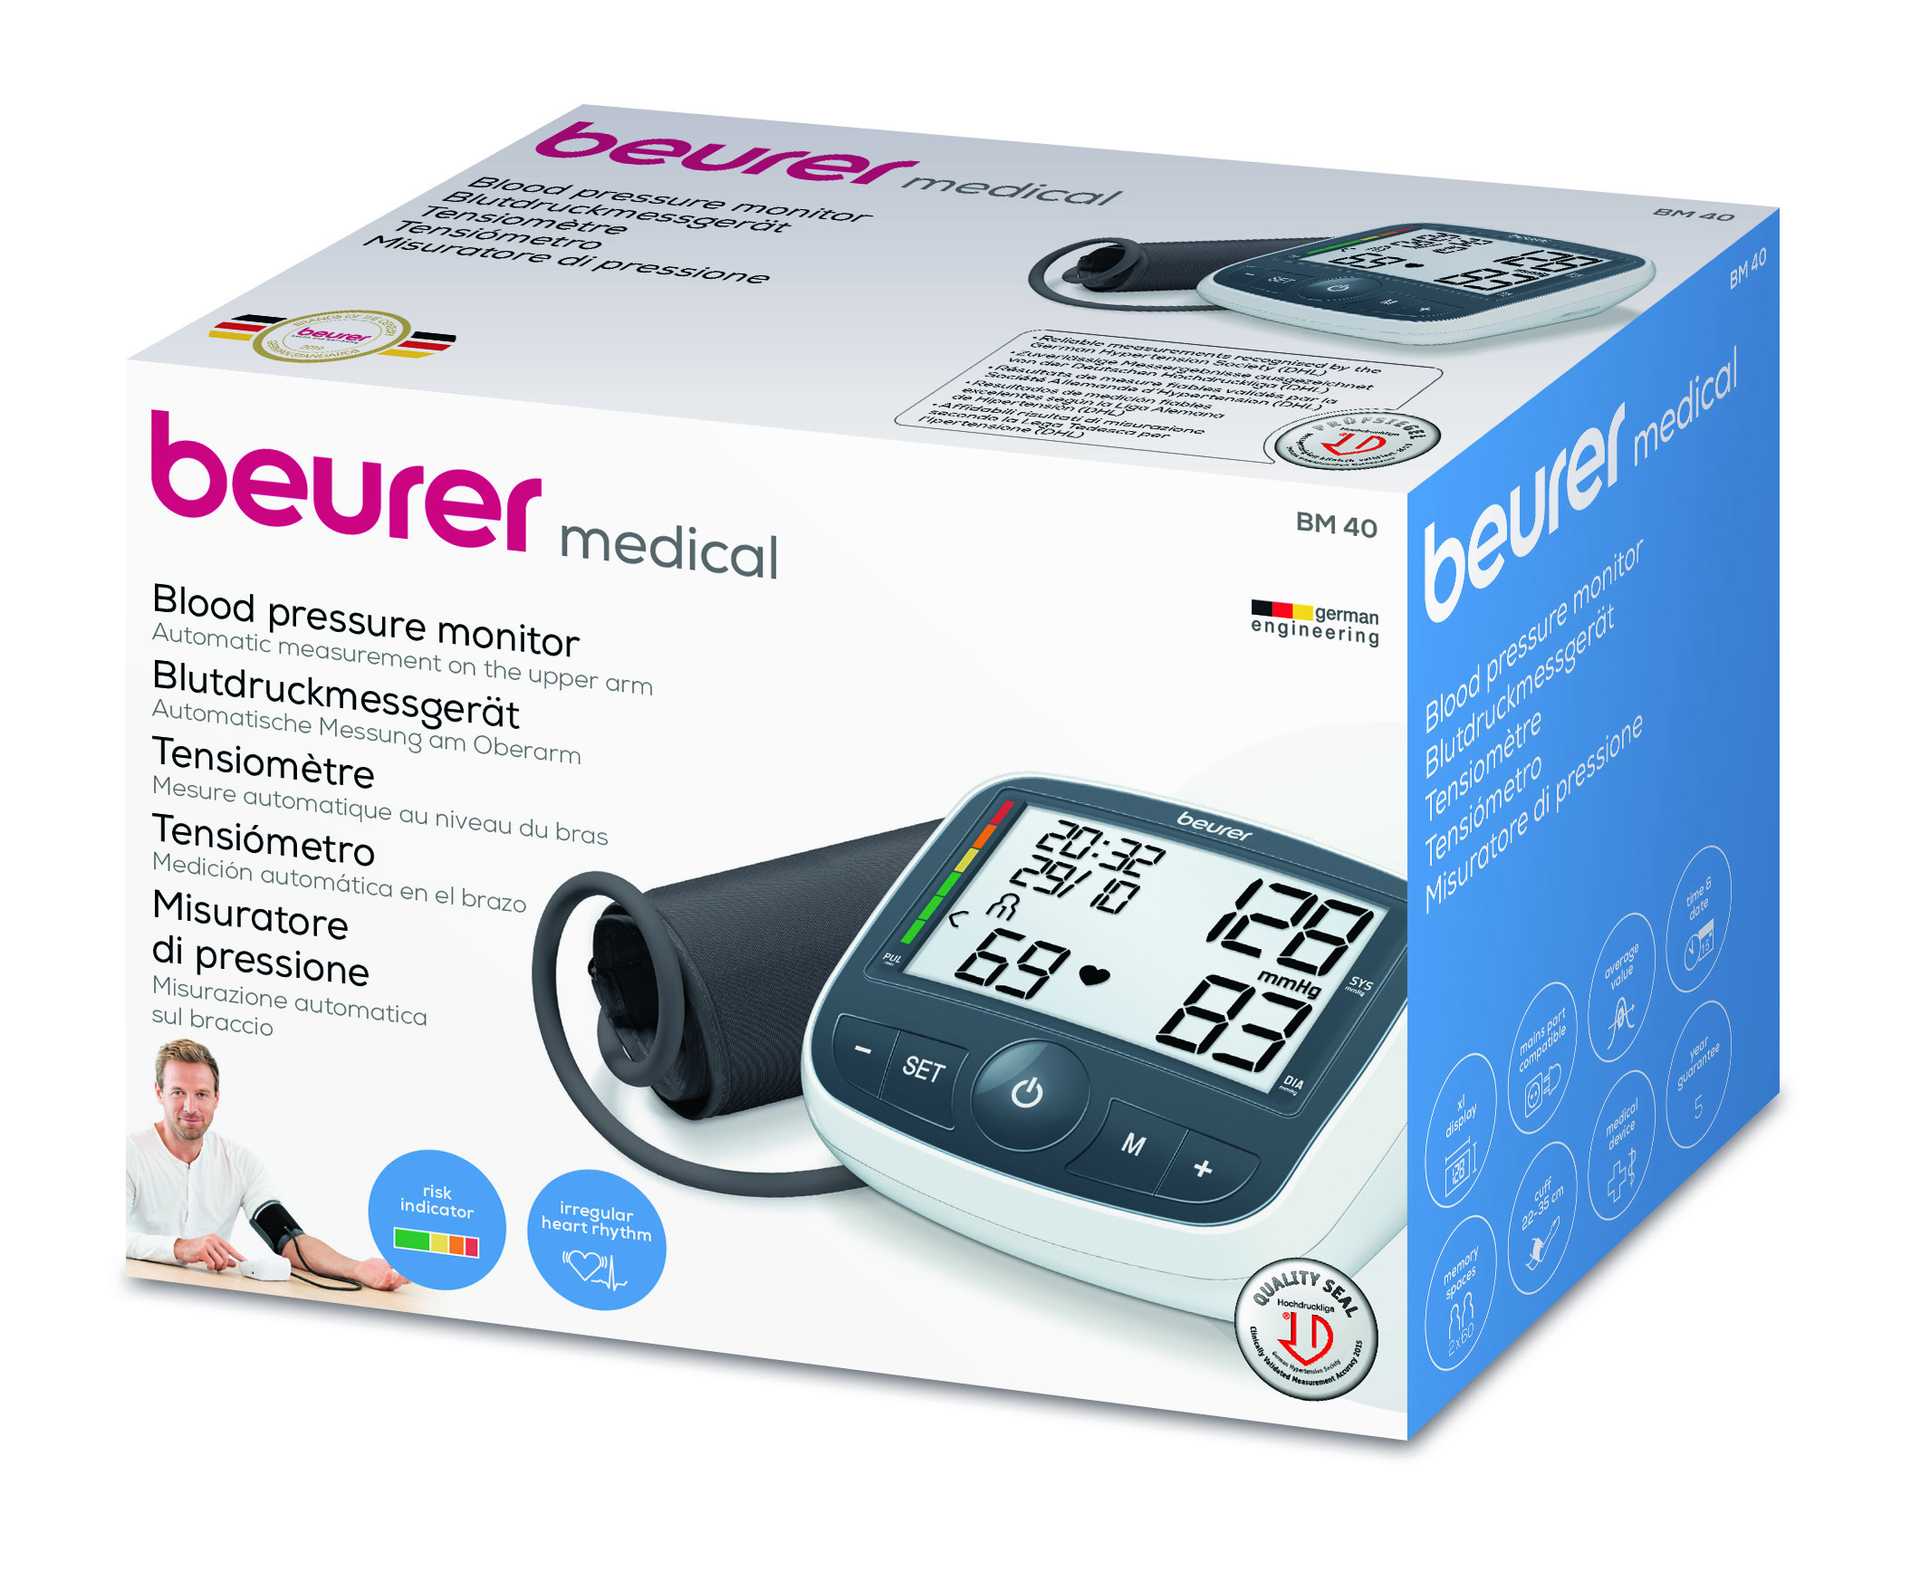 Buy Omron RS1 (HEM-6160-E) Automatic Wrist Digital Blood Pressure Monitor  Online in Pakistan